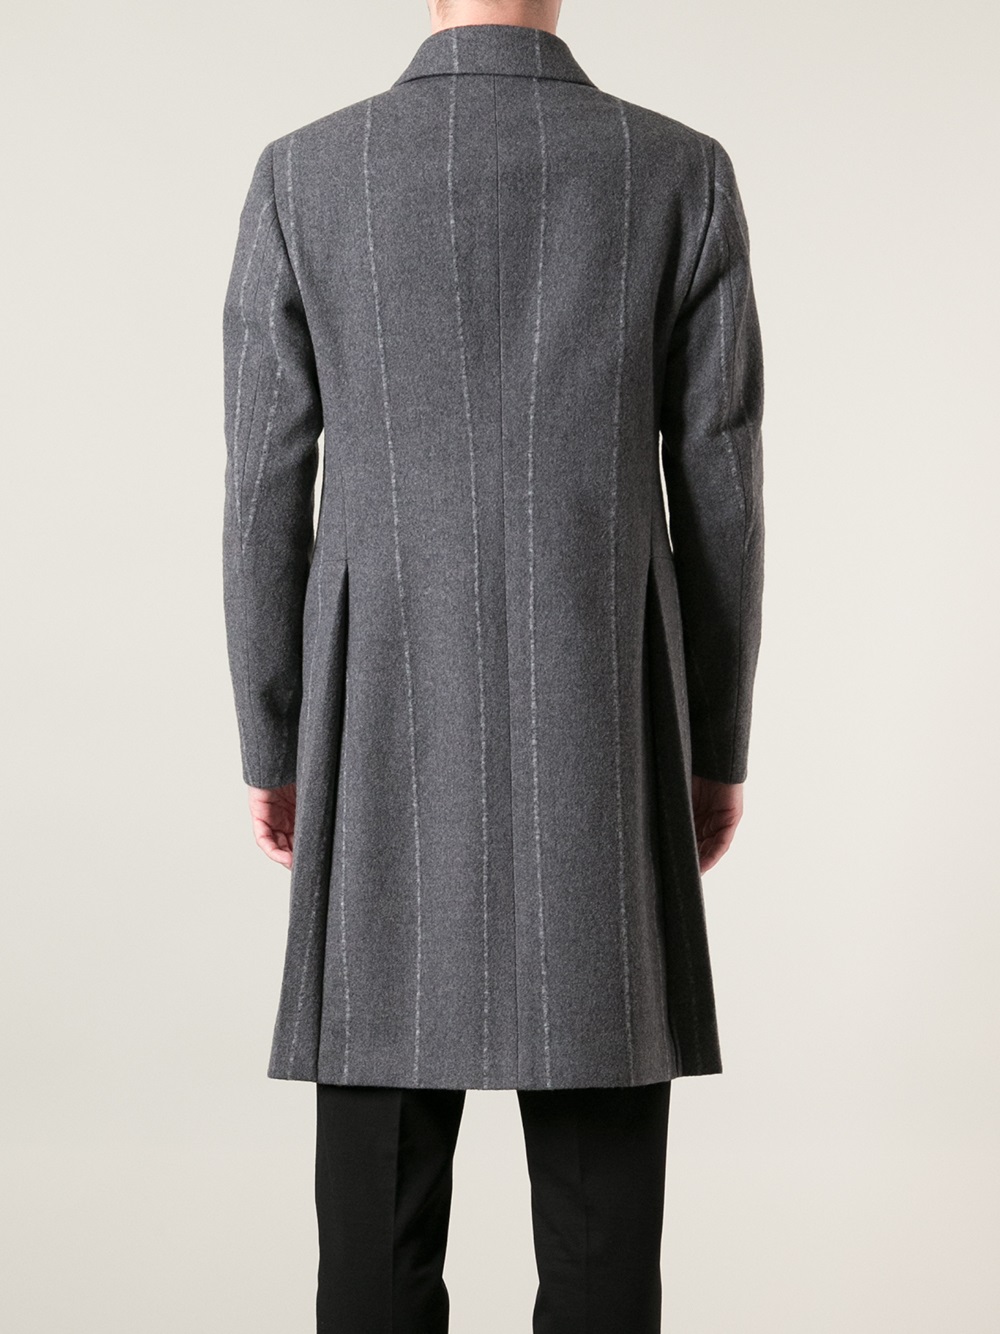 Jil Sander Chalk Stripe Overcoat in Grey (Gray) for Men - Lyst